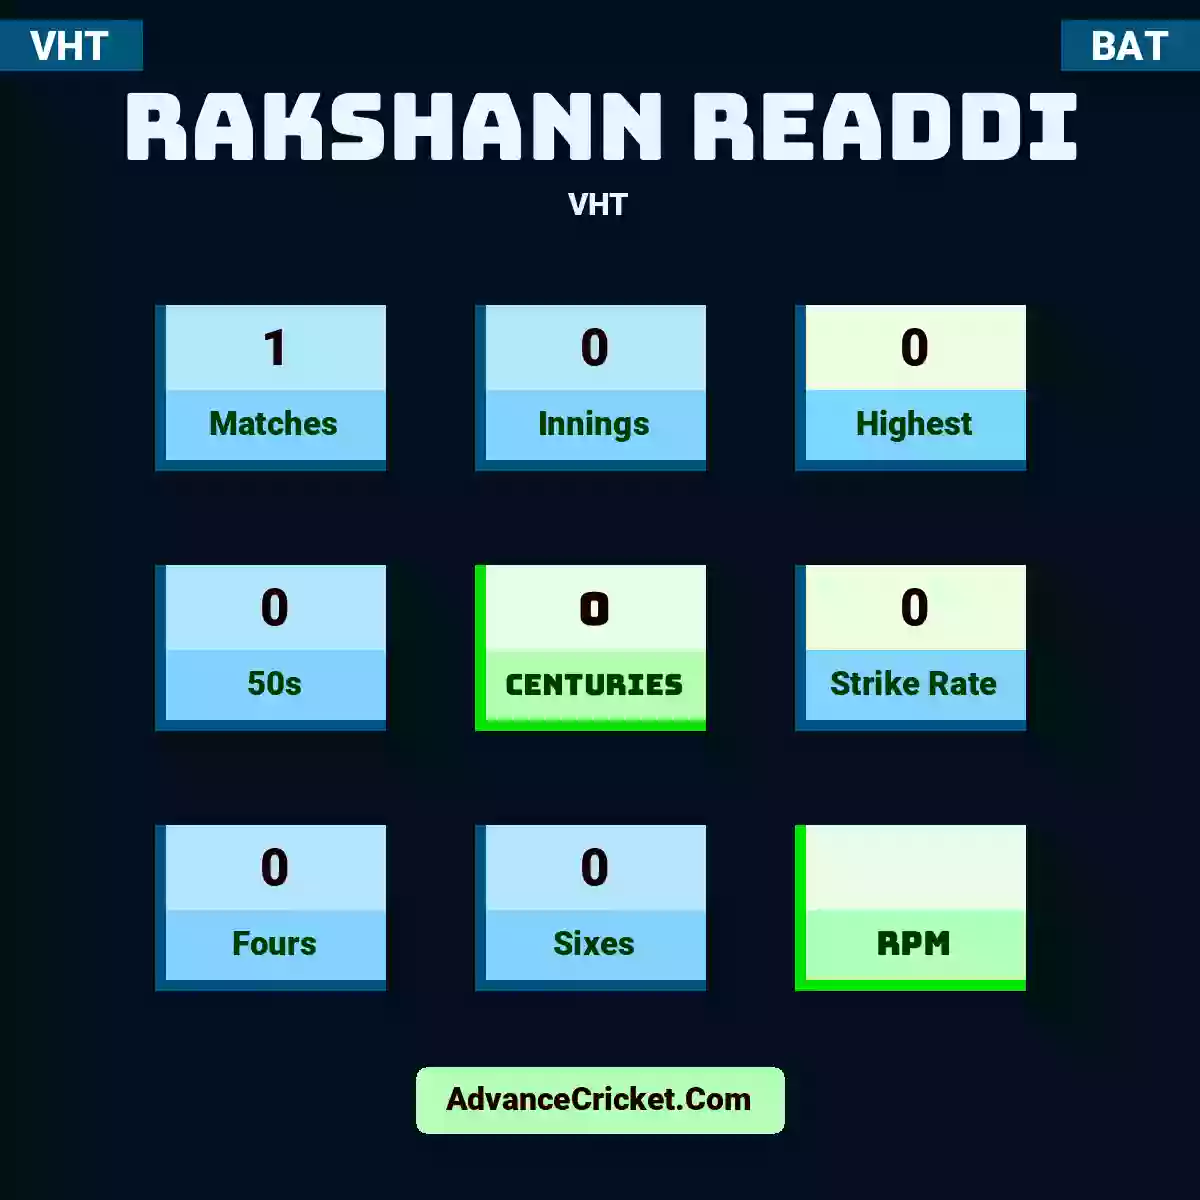 Rakshann Readdi VHT , Rakshann Readdi played 1 matches, scored 0 runs as highest, 0 half-centuries, and 0 centuries, with a strike rate of 0. R.Readdi hit 0 fours and 0 sixes.